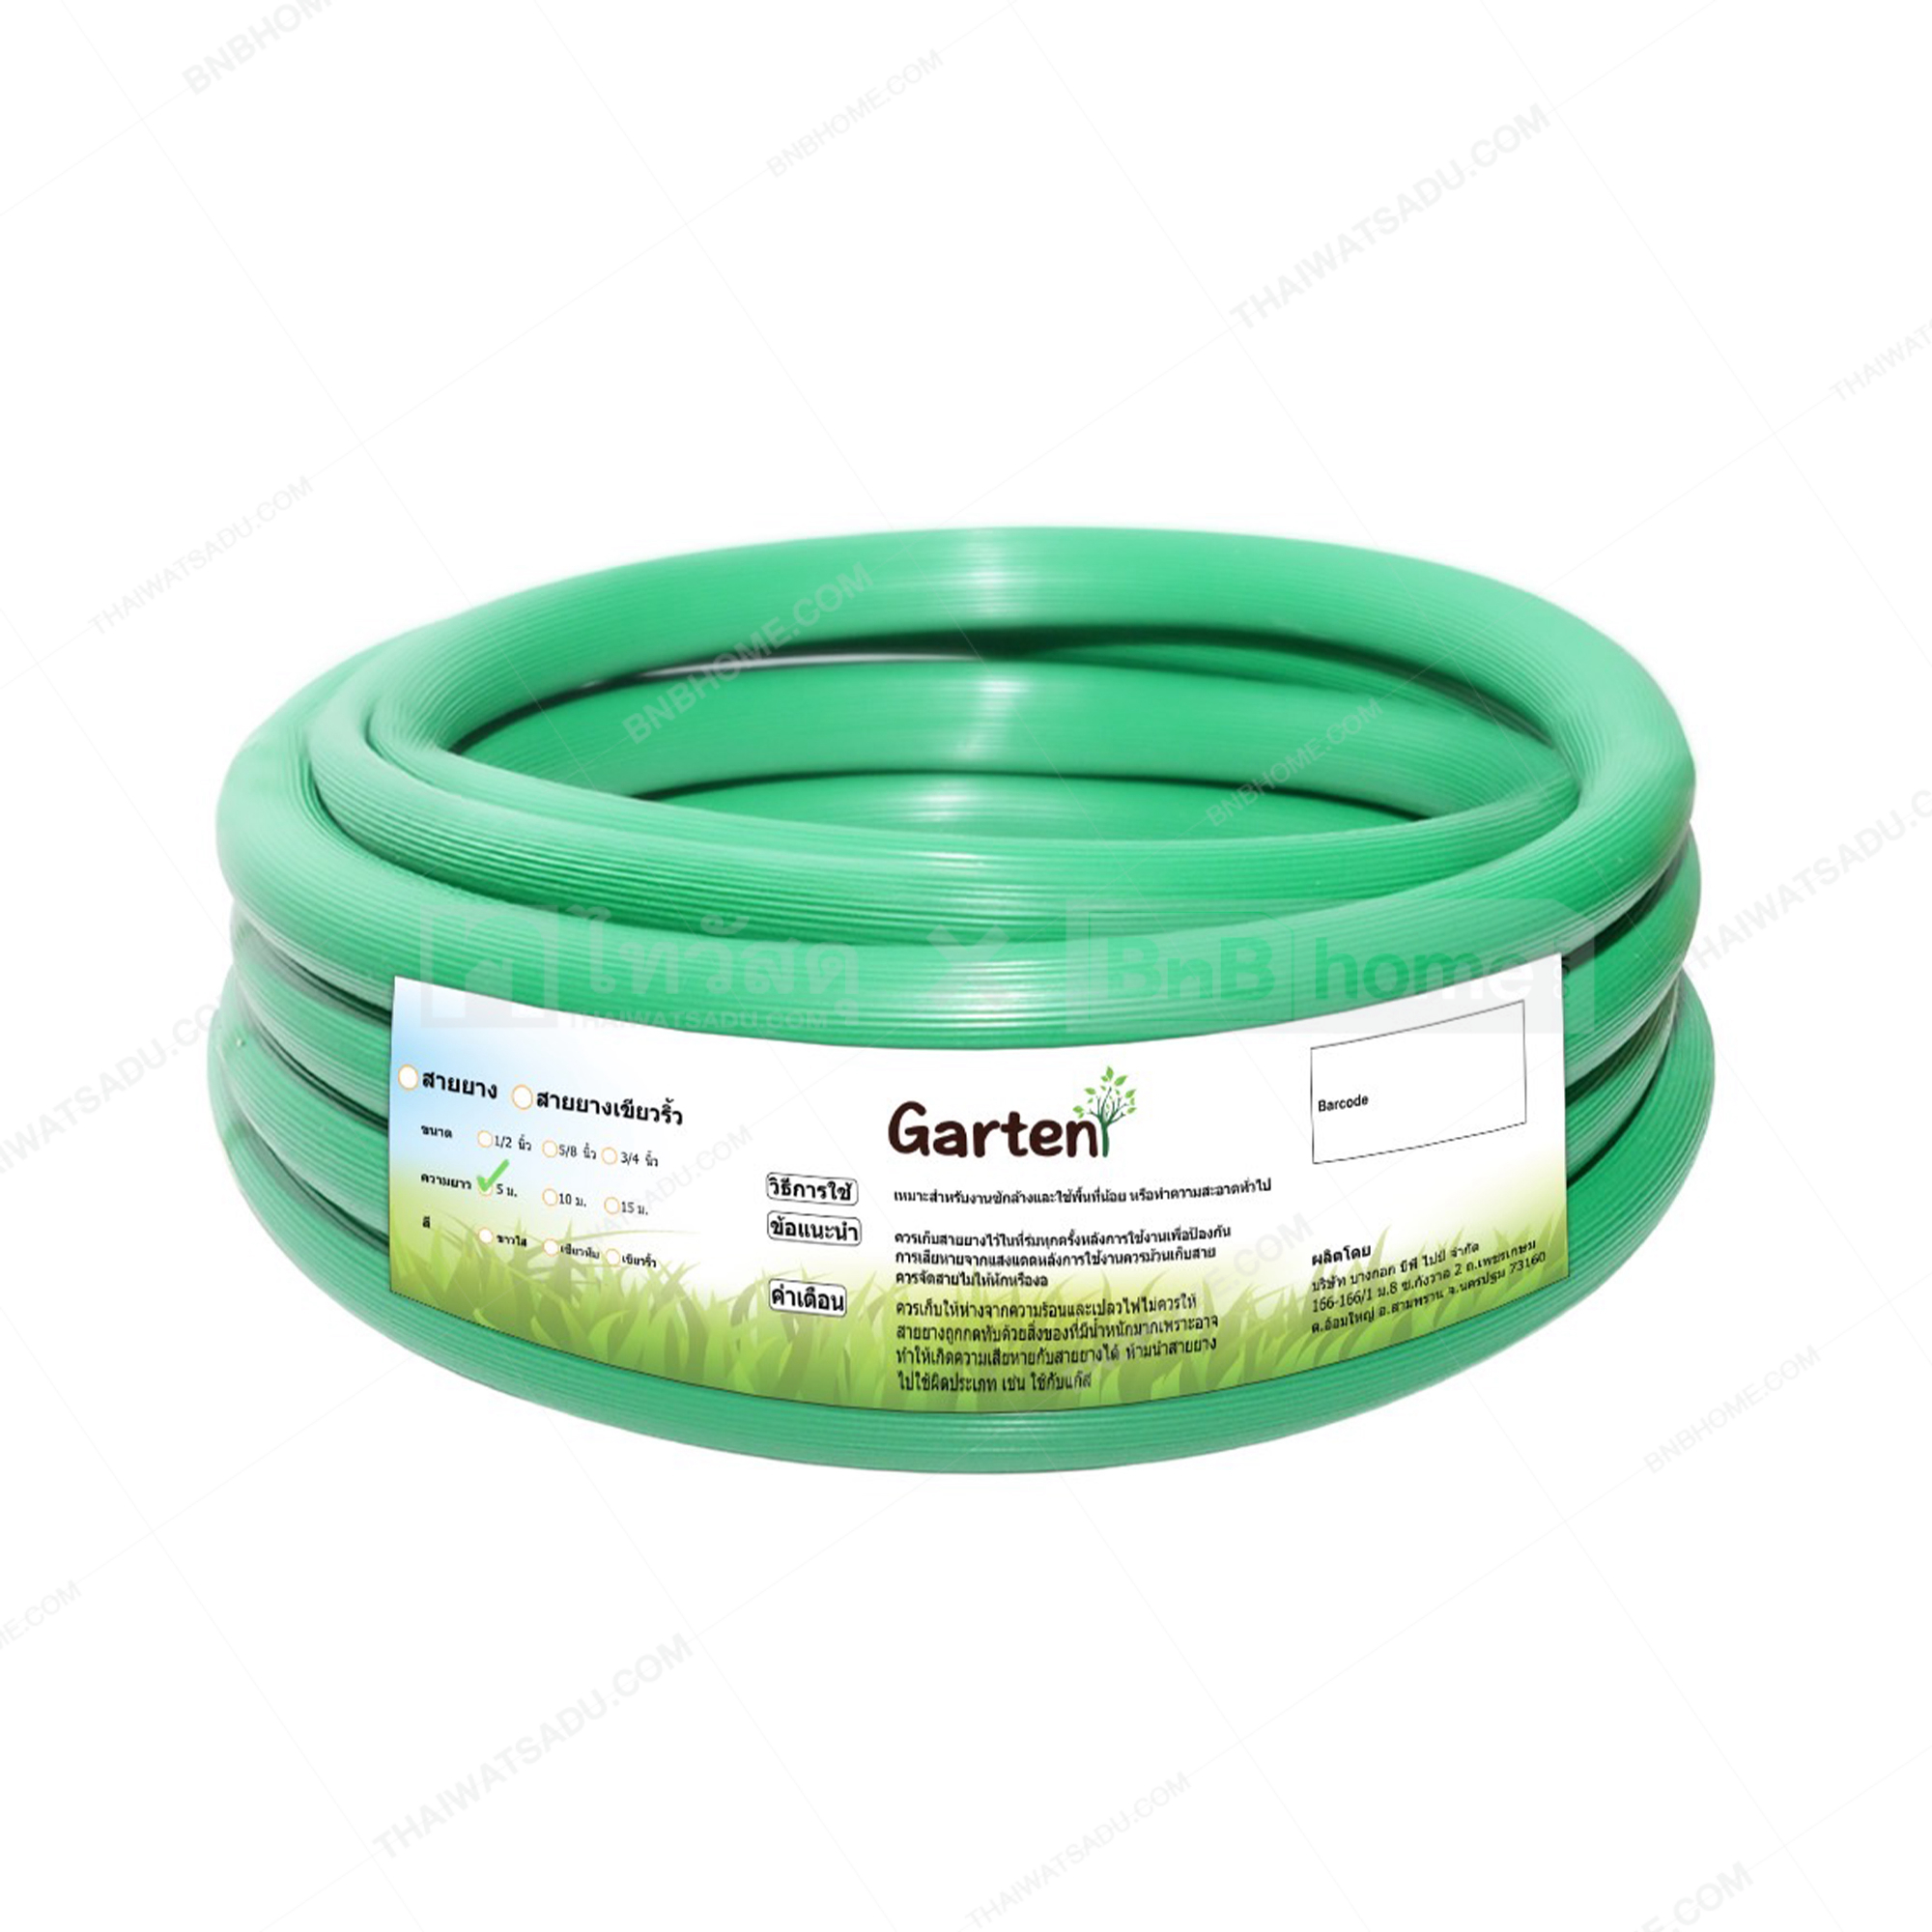 How to choose the right size garden hose. - THAI WATSADU